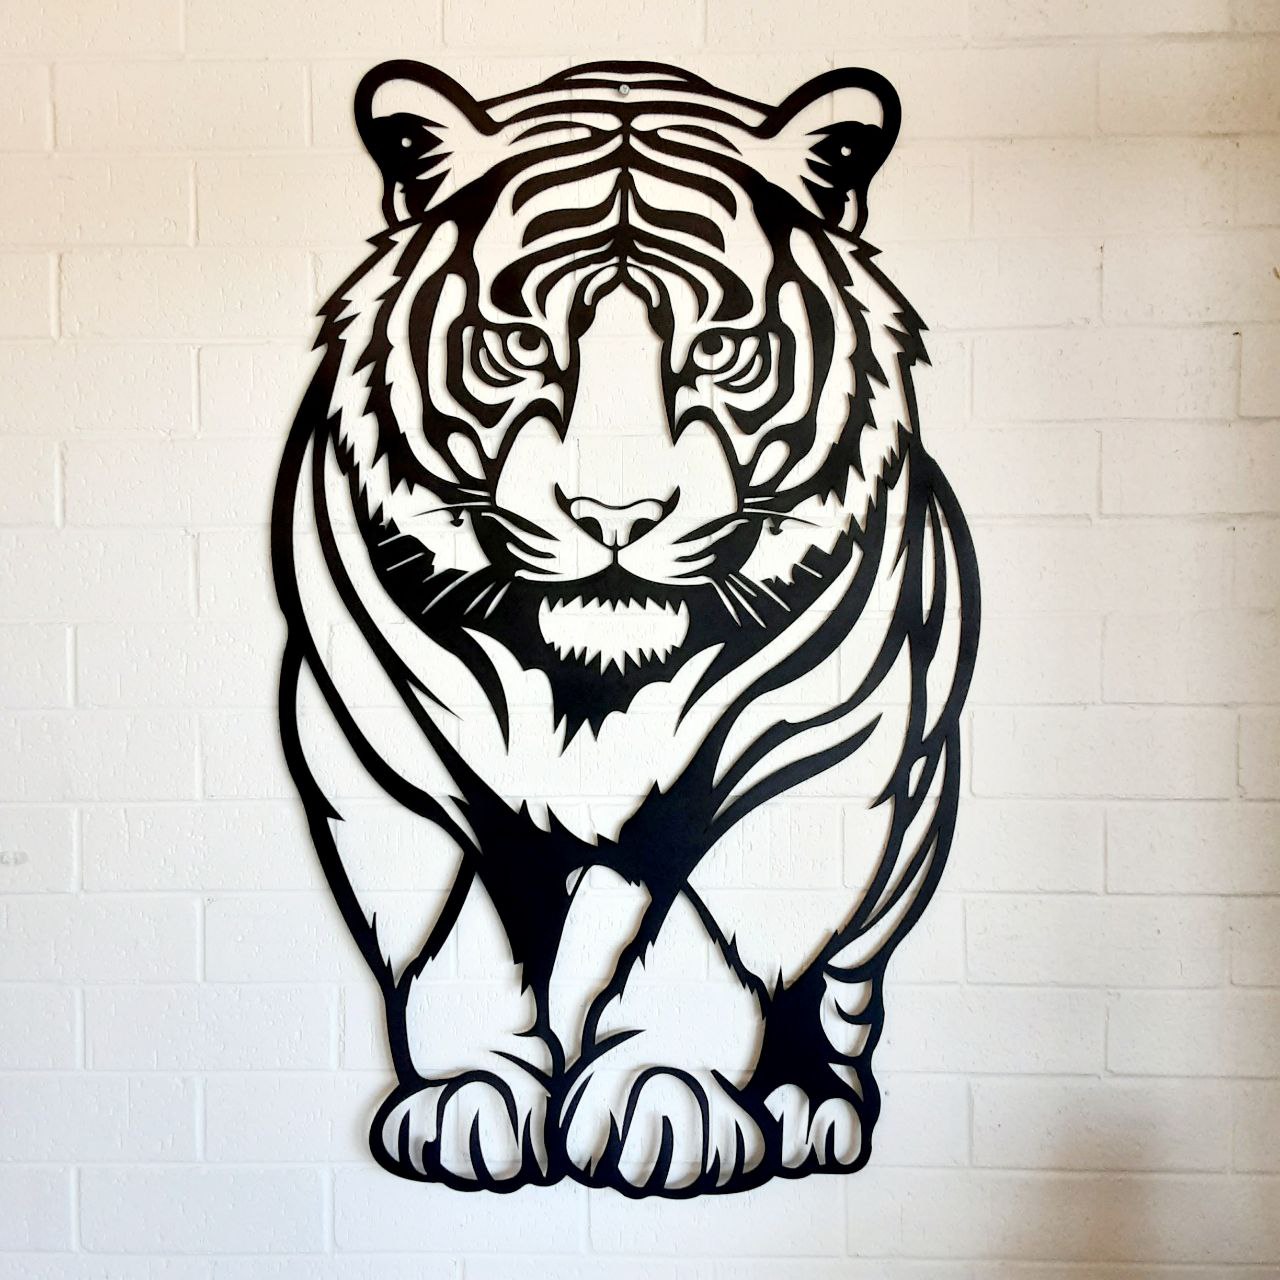 Tiger's March Metal Wall Art